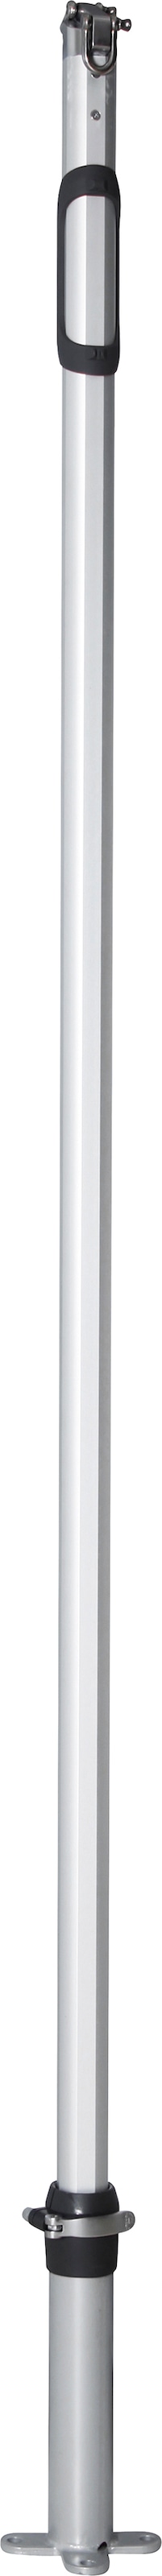 Sonnensegelmast »Alu-Pro«, Mast-Höhe ca. 220 cm inklusive Standfuß